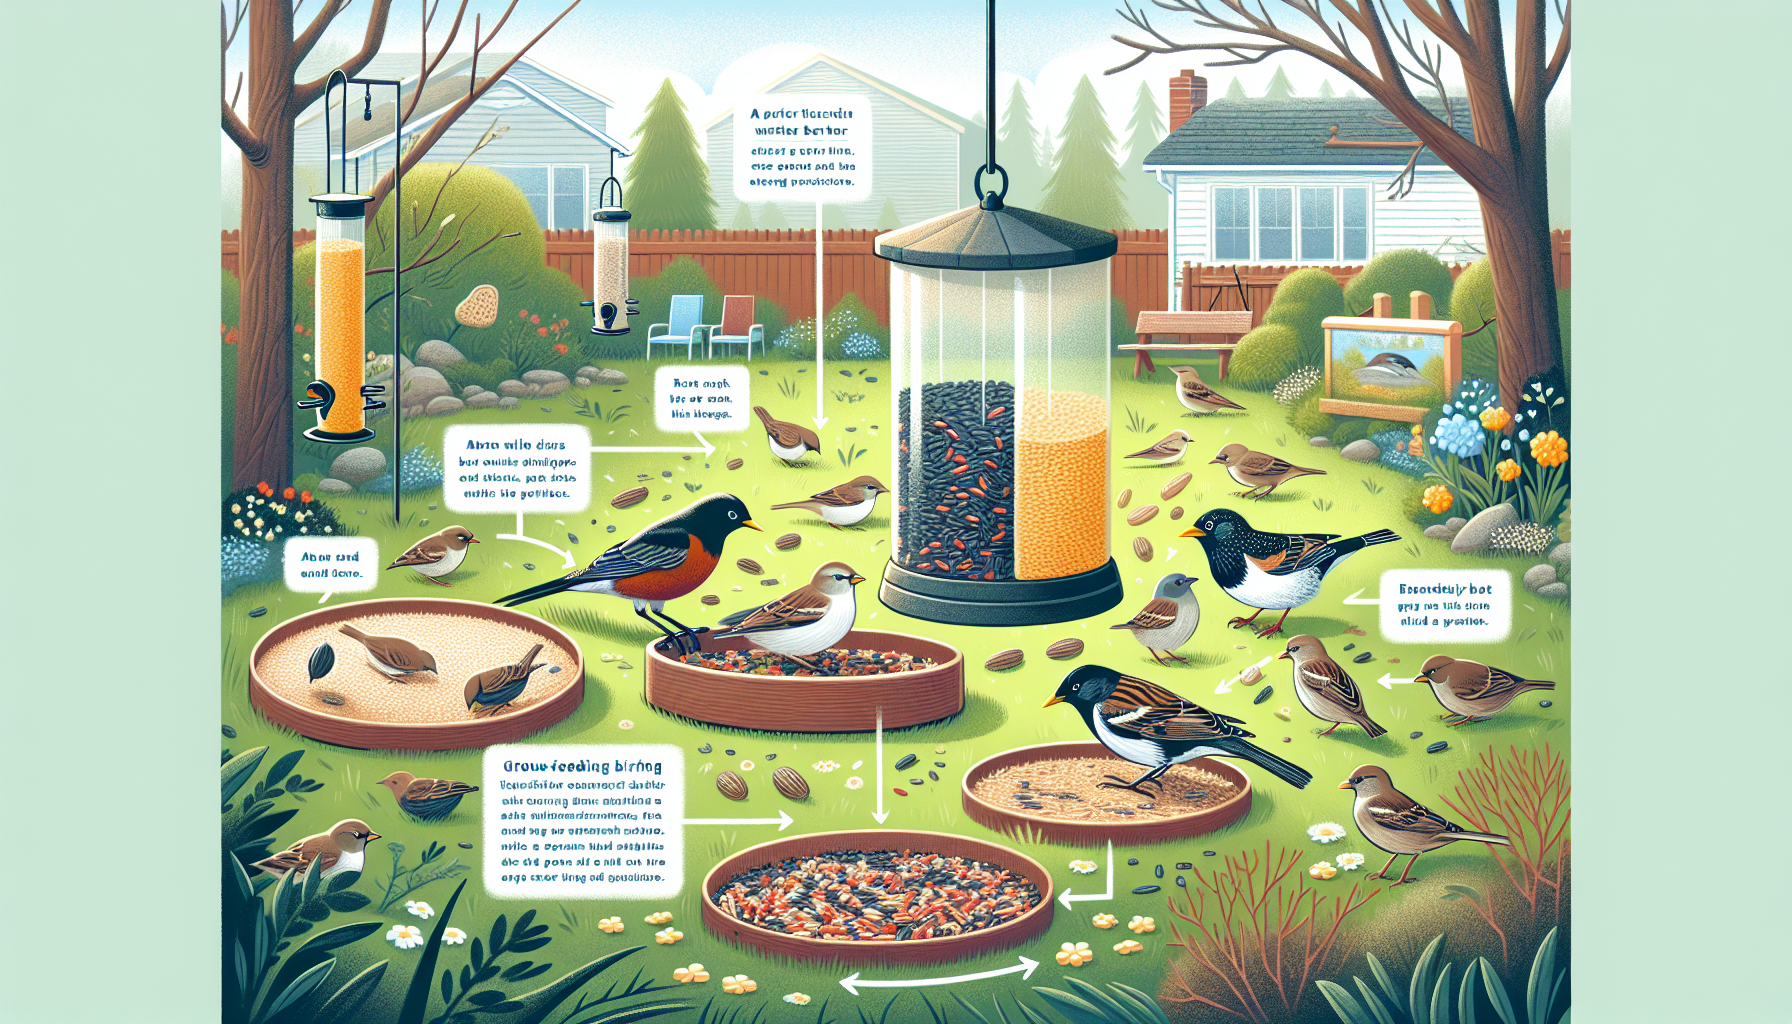 Attracting and understanding the behavior of ground-feeding birds in your backyard